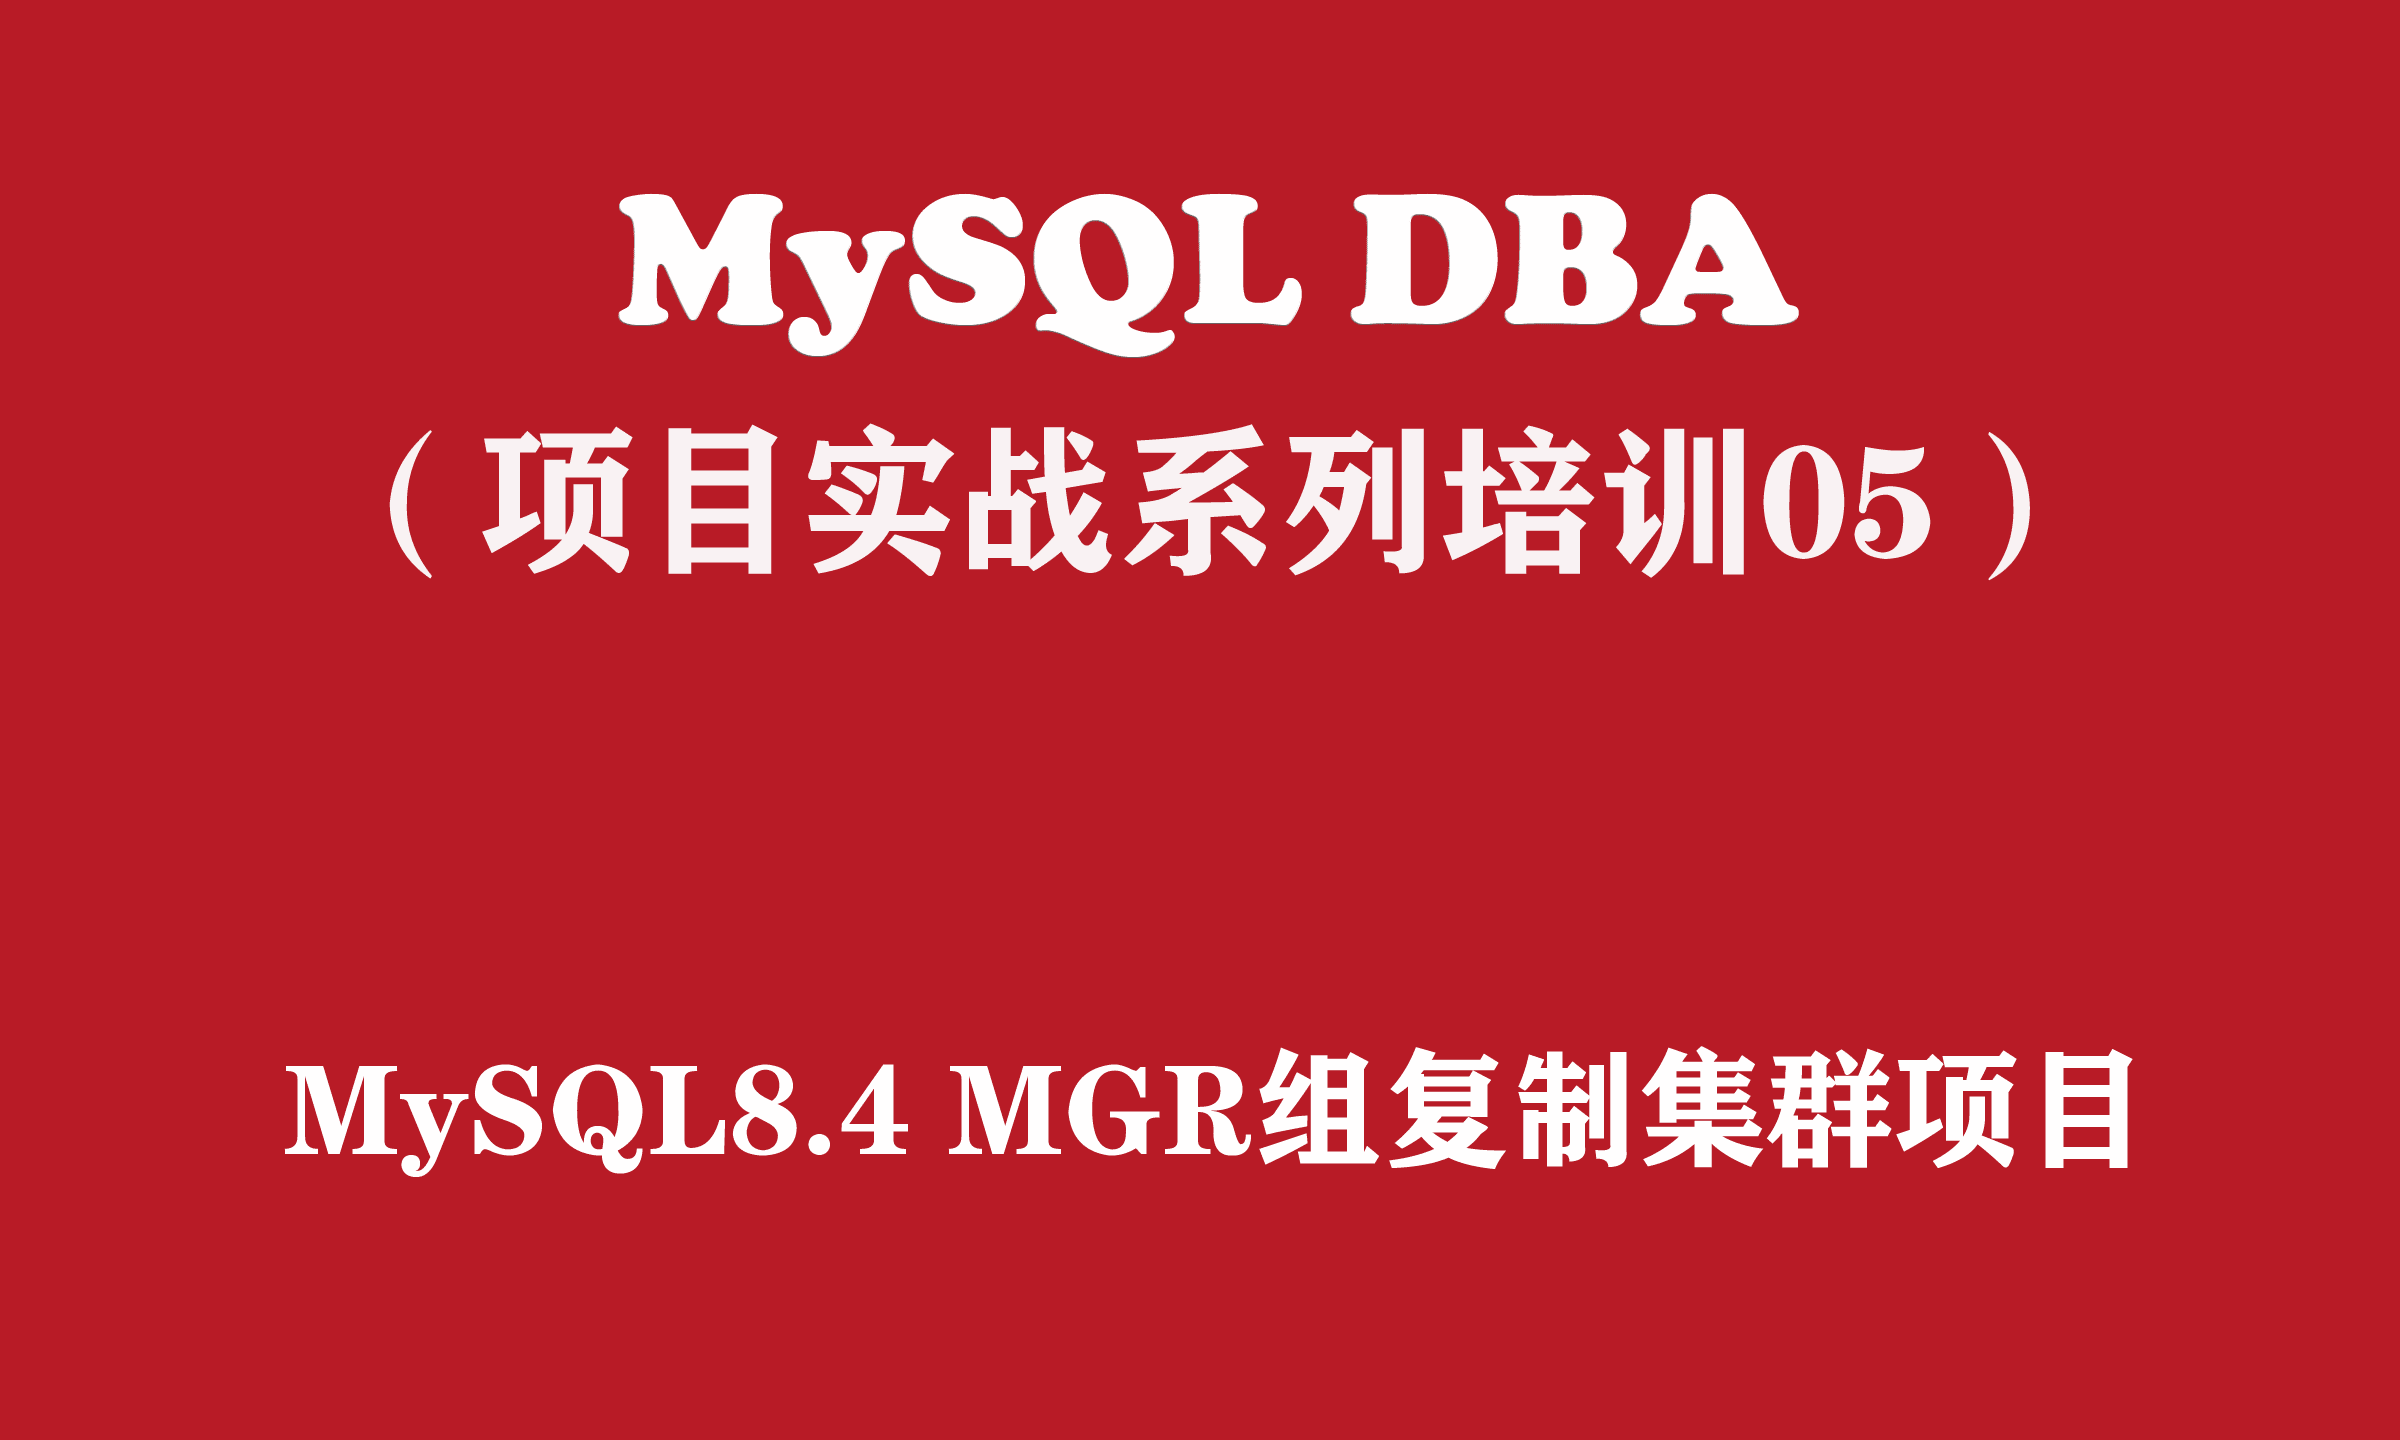 MySQL8.4 MGR组复制集群项目实战【MySQL DBA实战培训系列05】